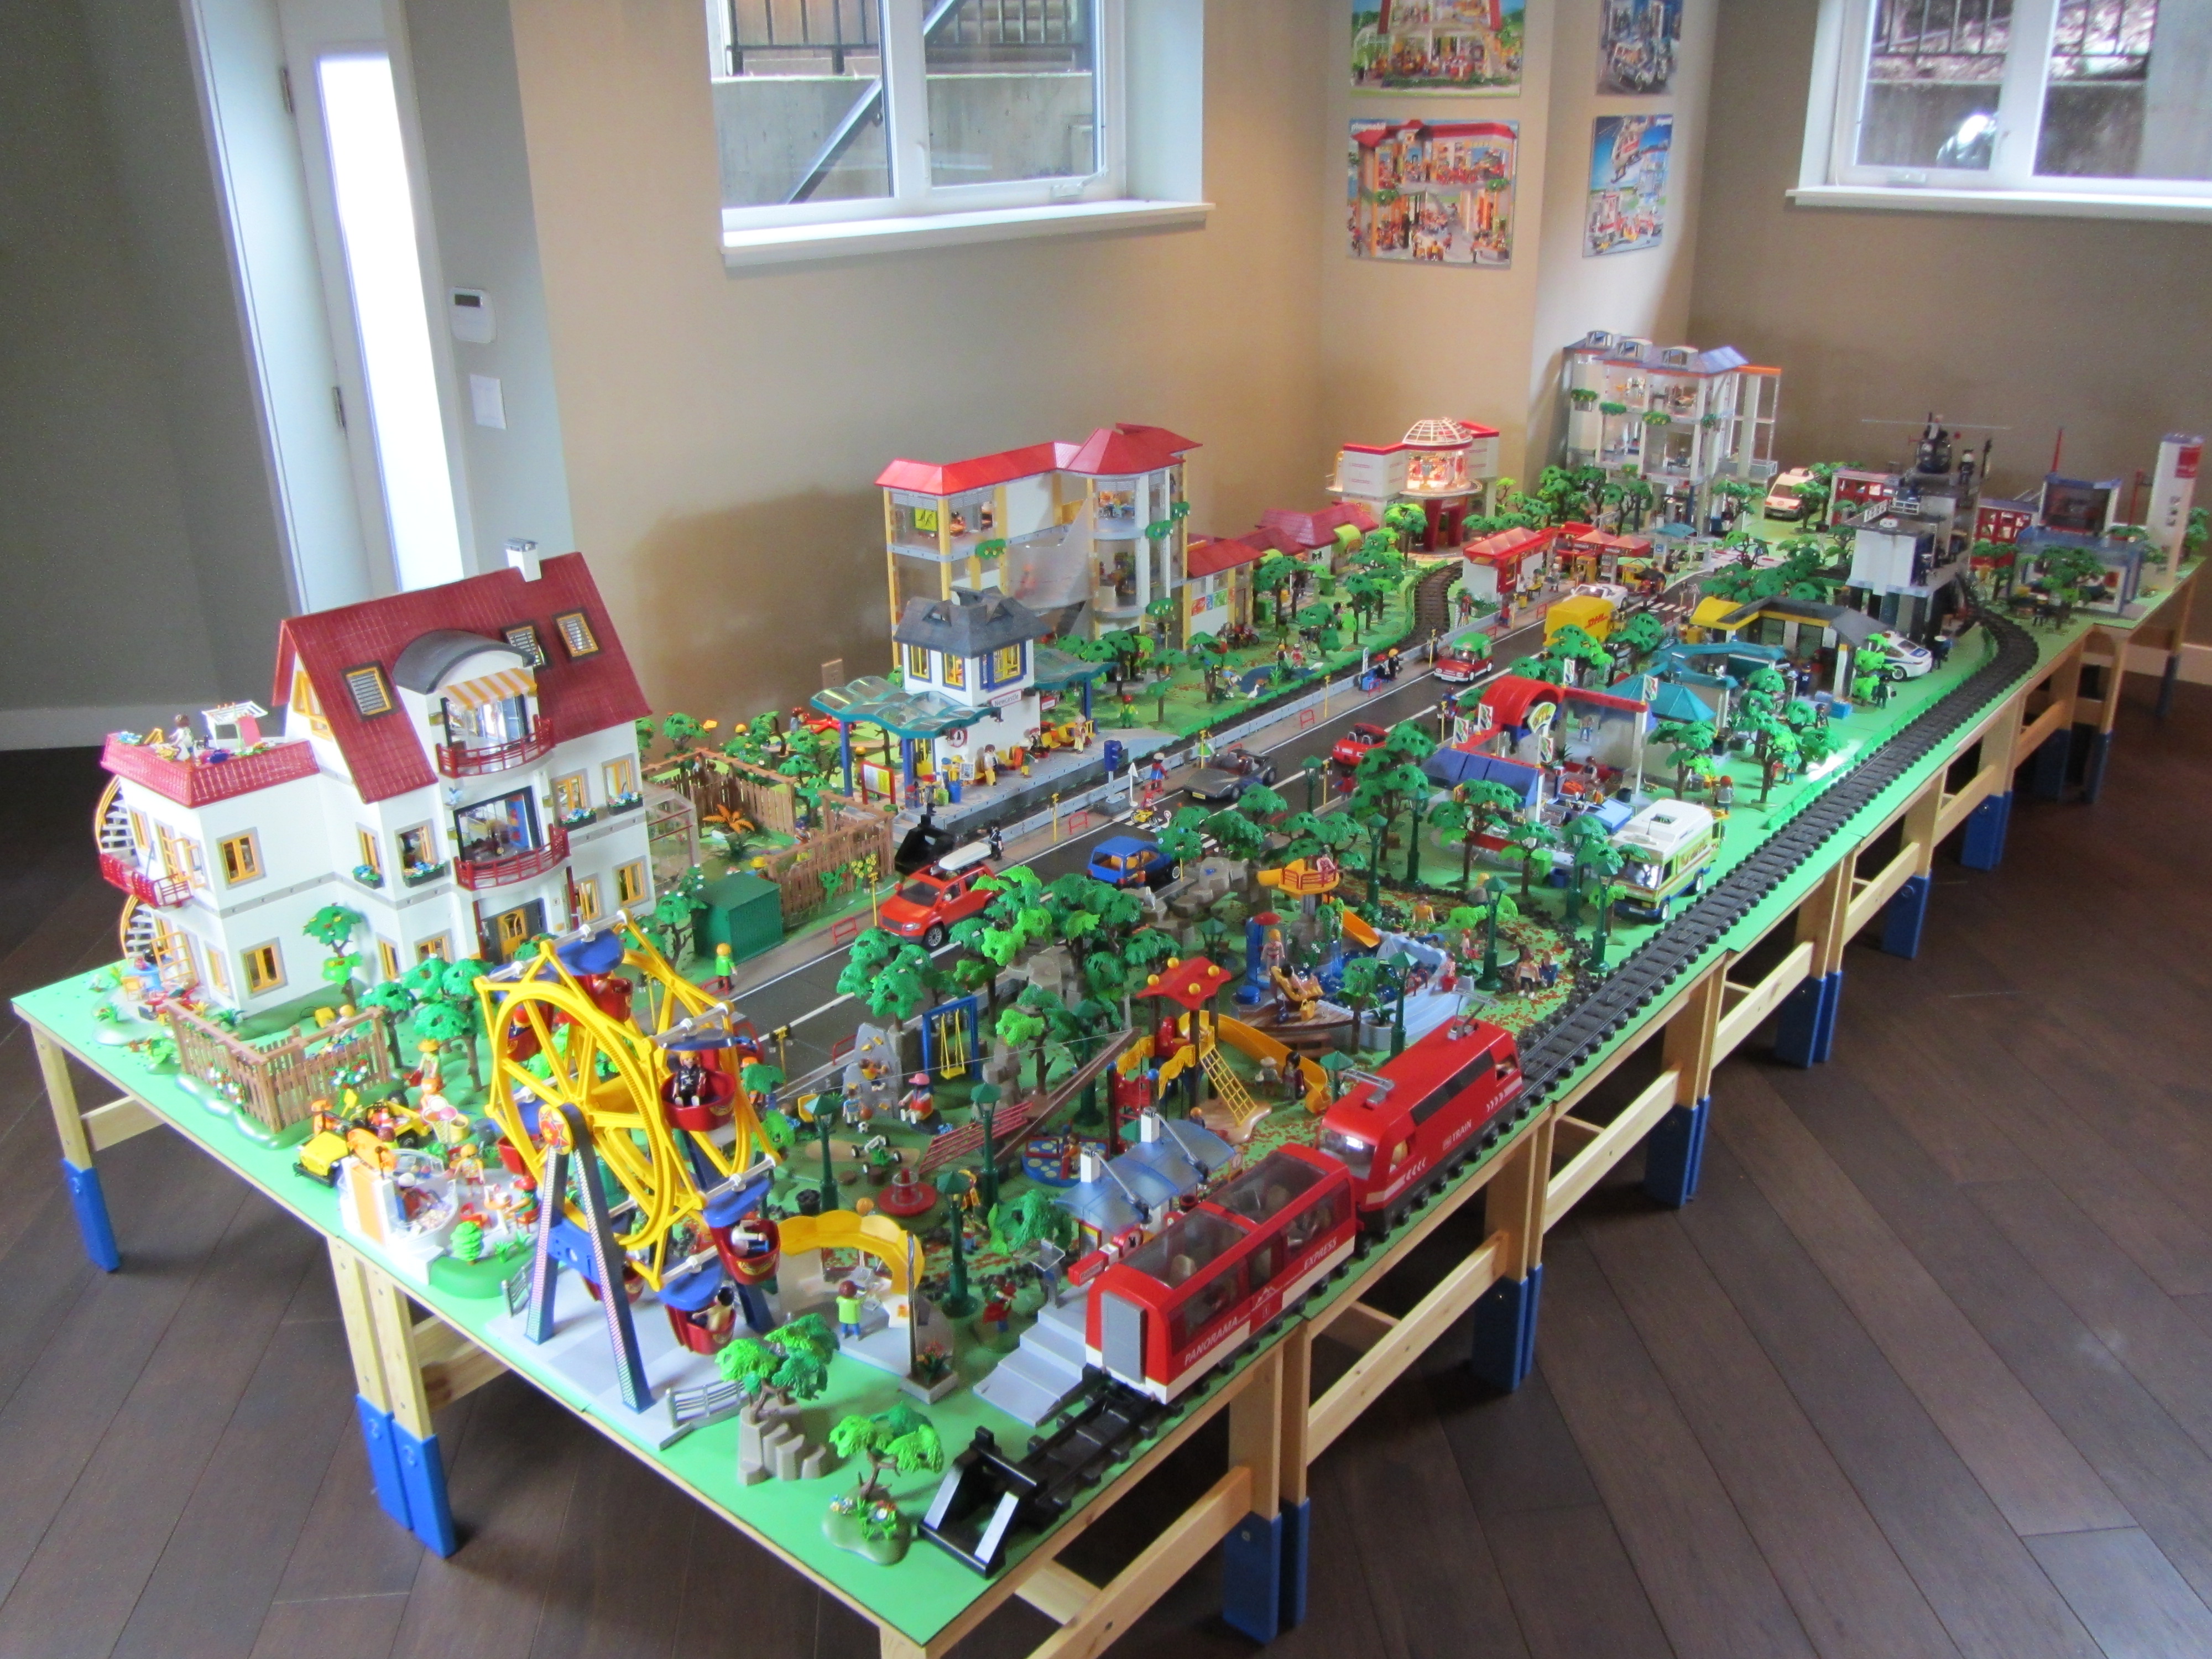 playmobil building sets